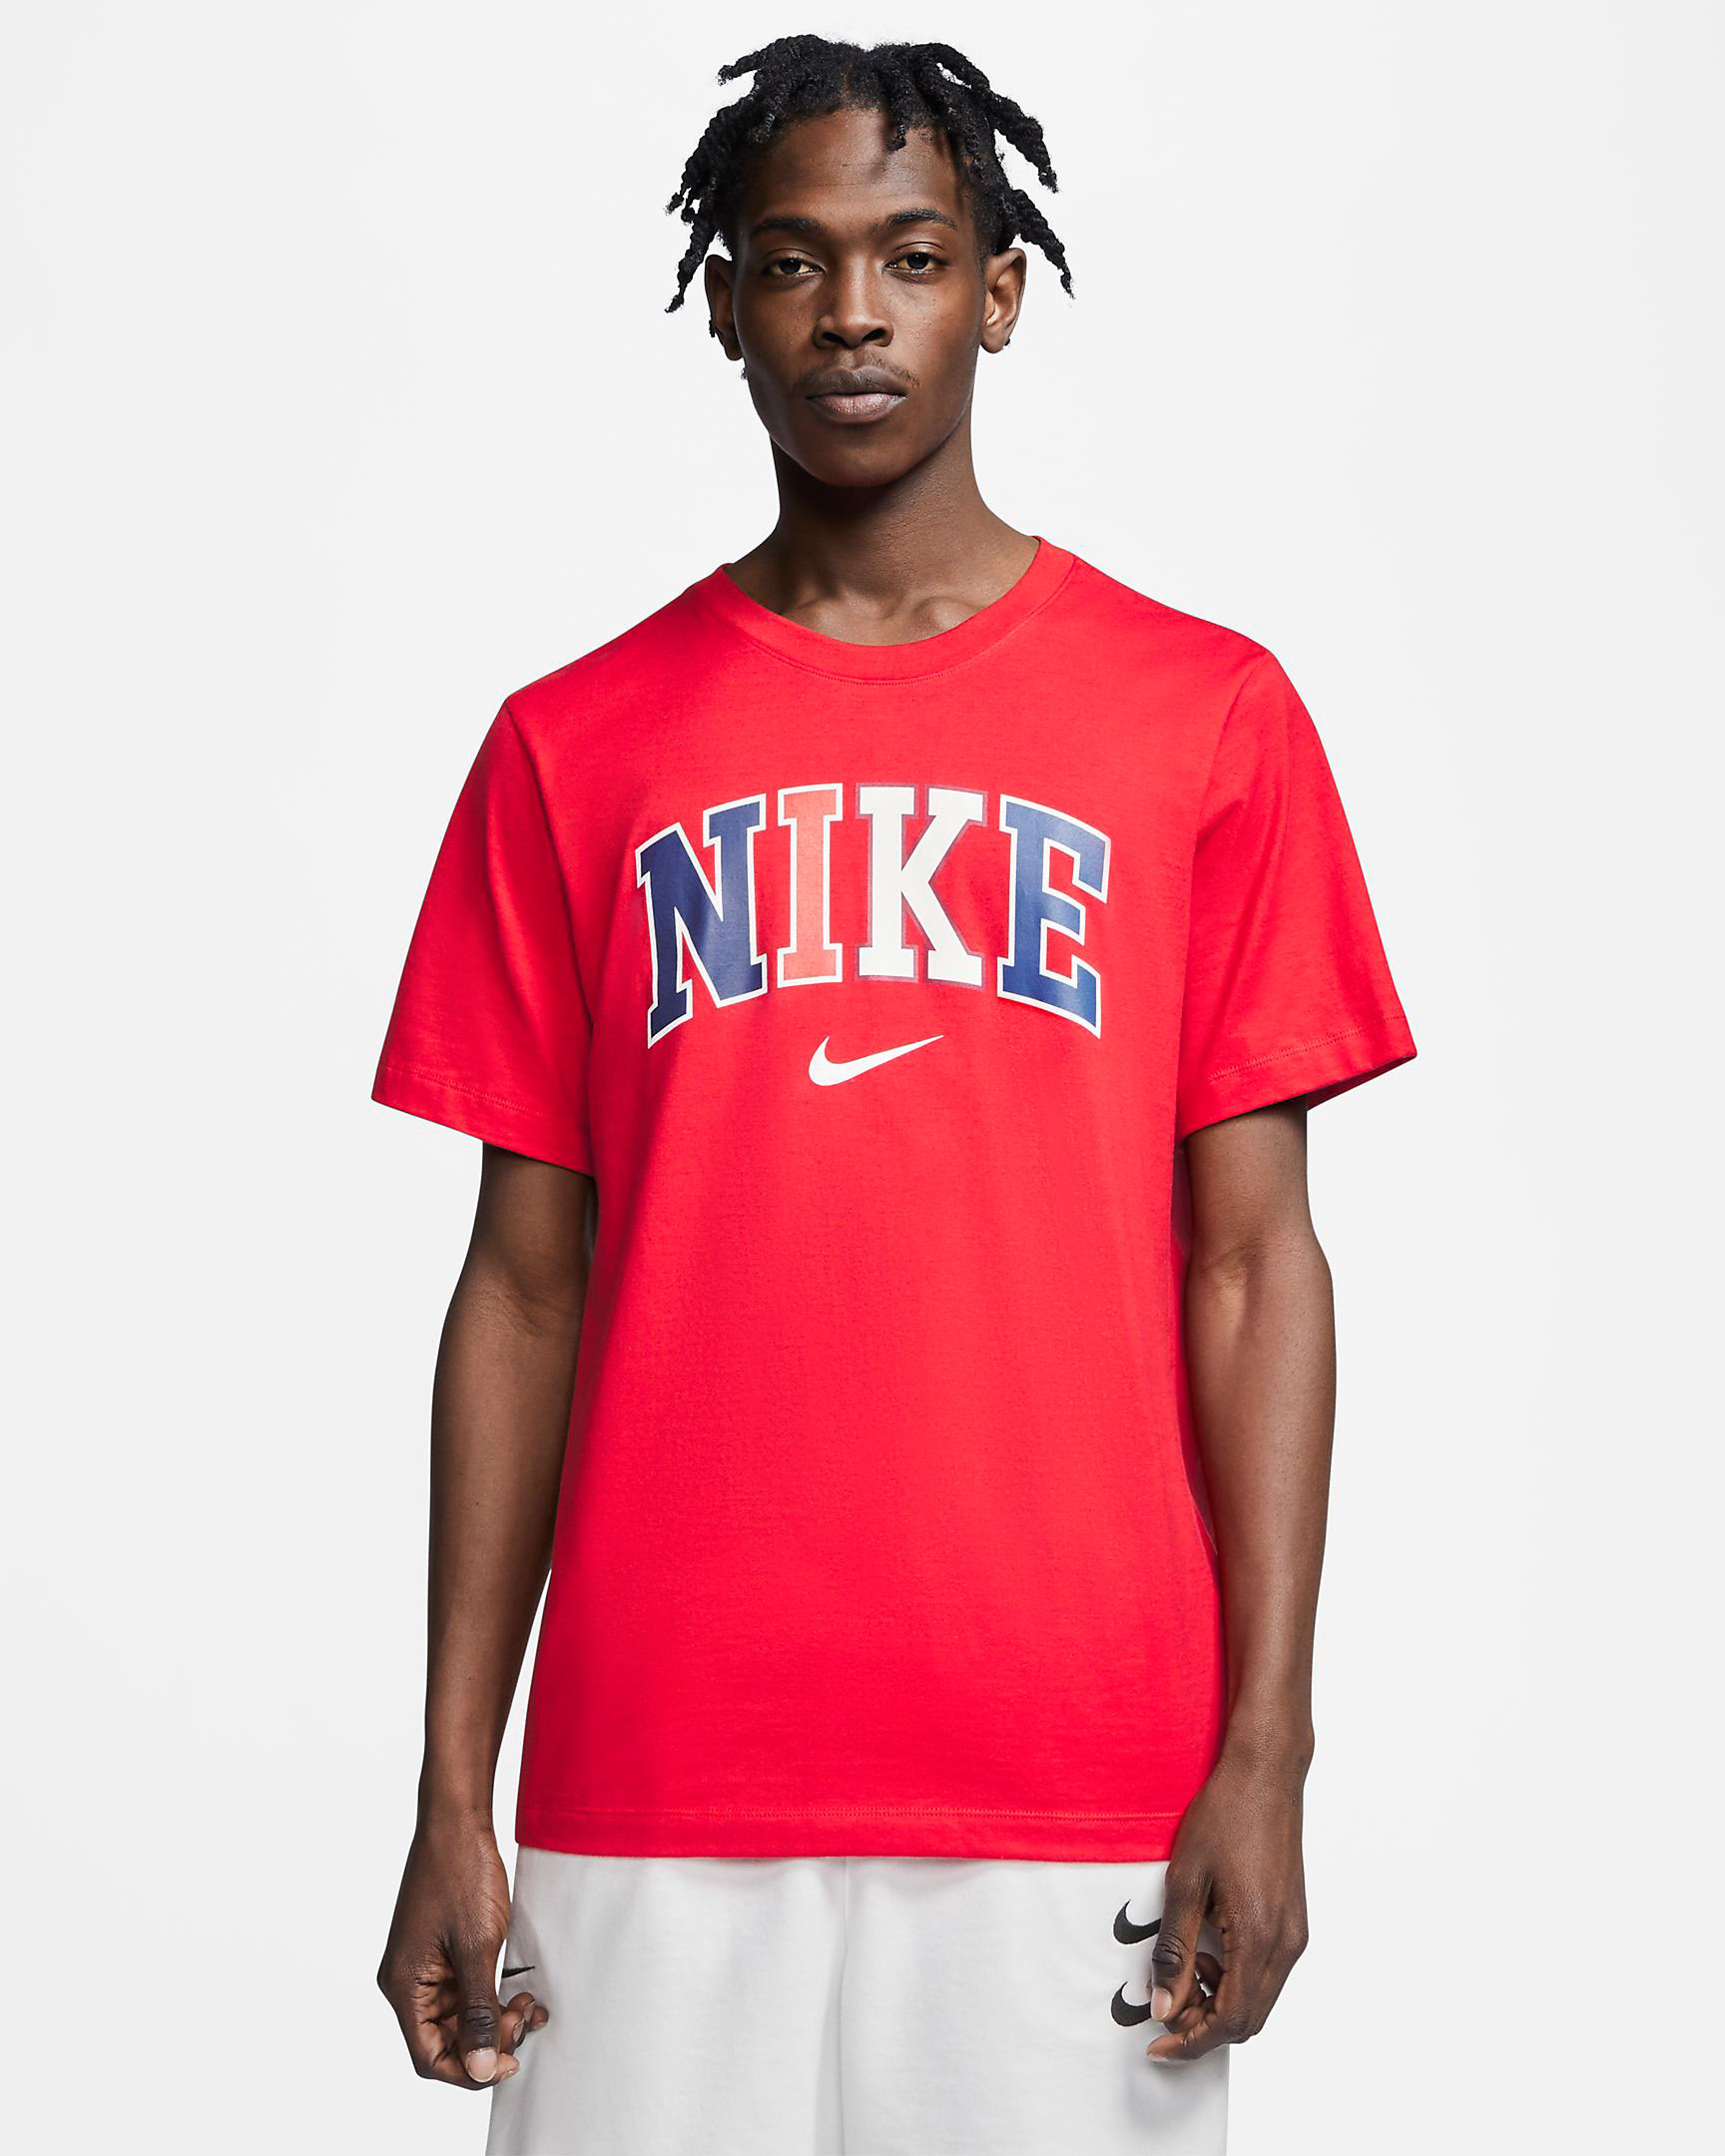 nike-sportswear-usa-americana-tee-shirt-red